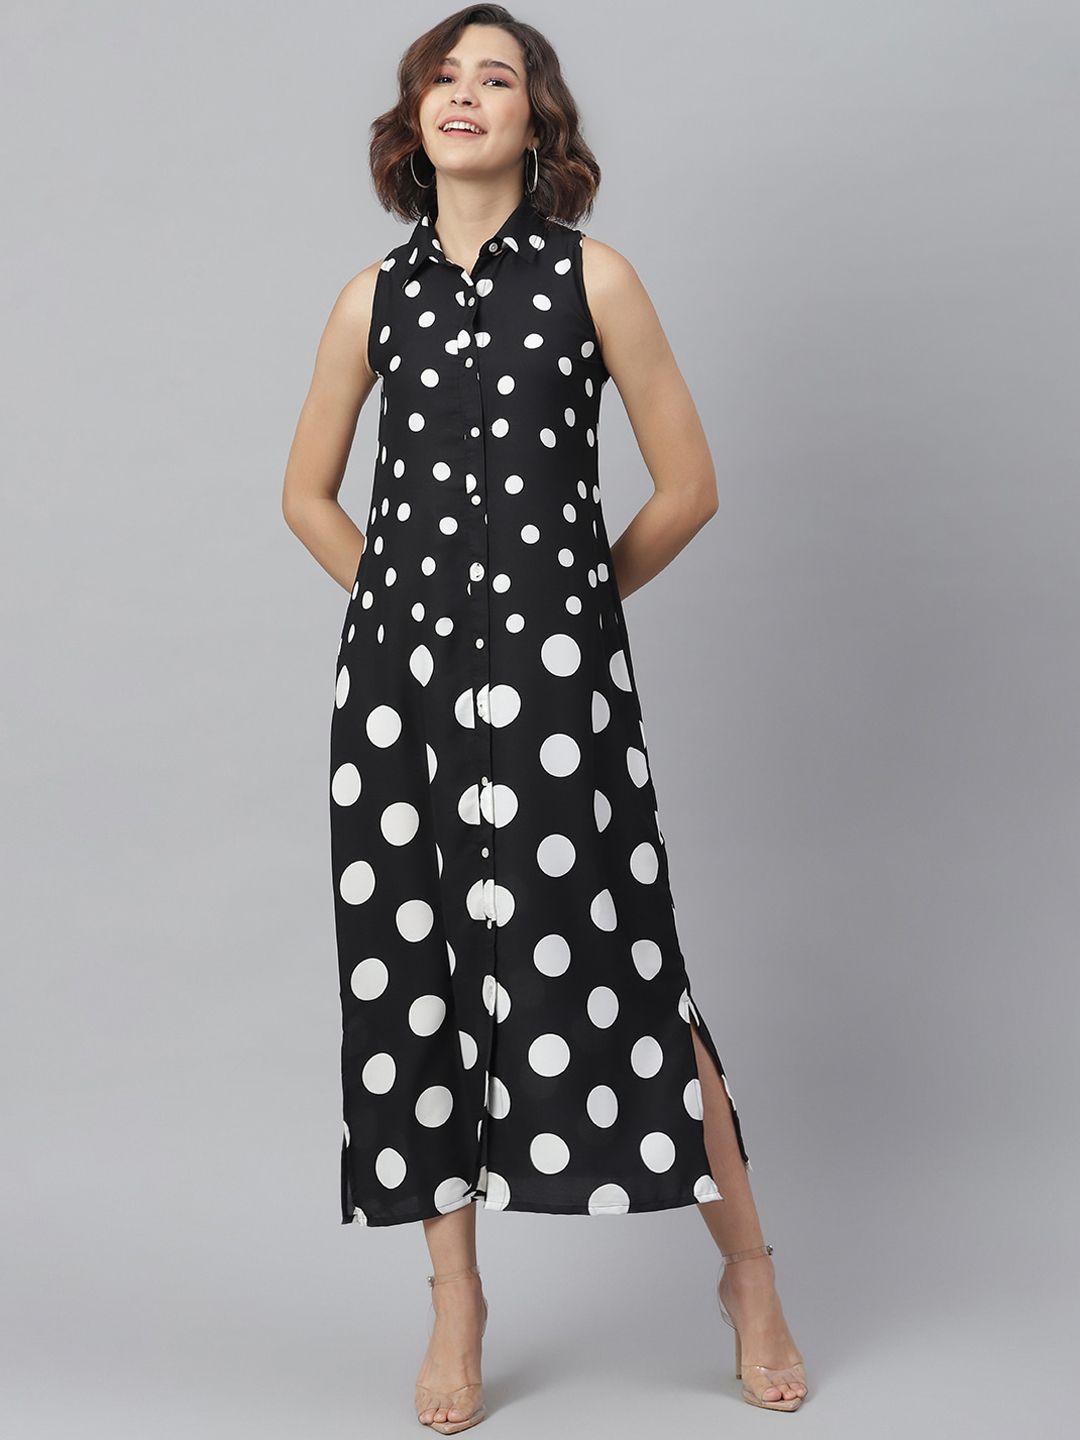 stylestone women black & white polka dot printed maxi dress